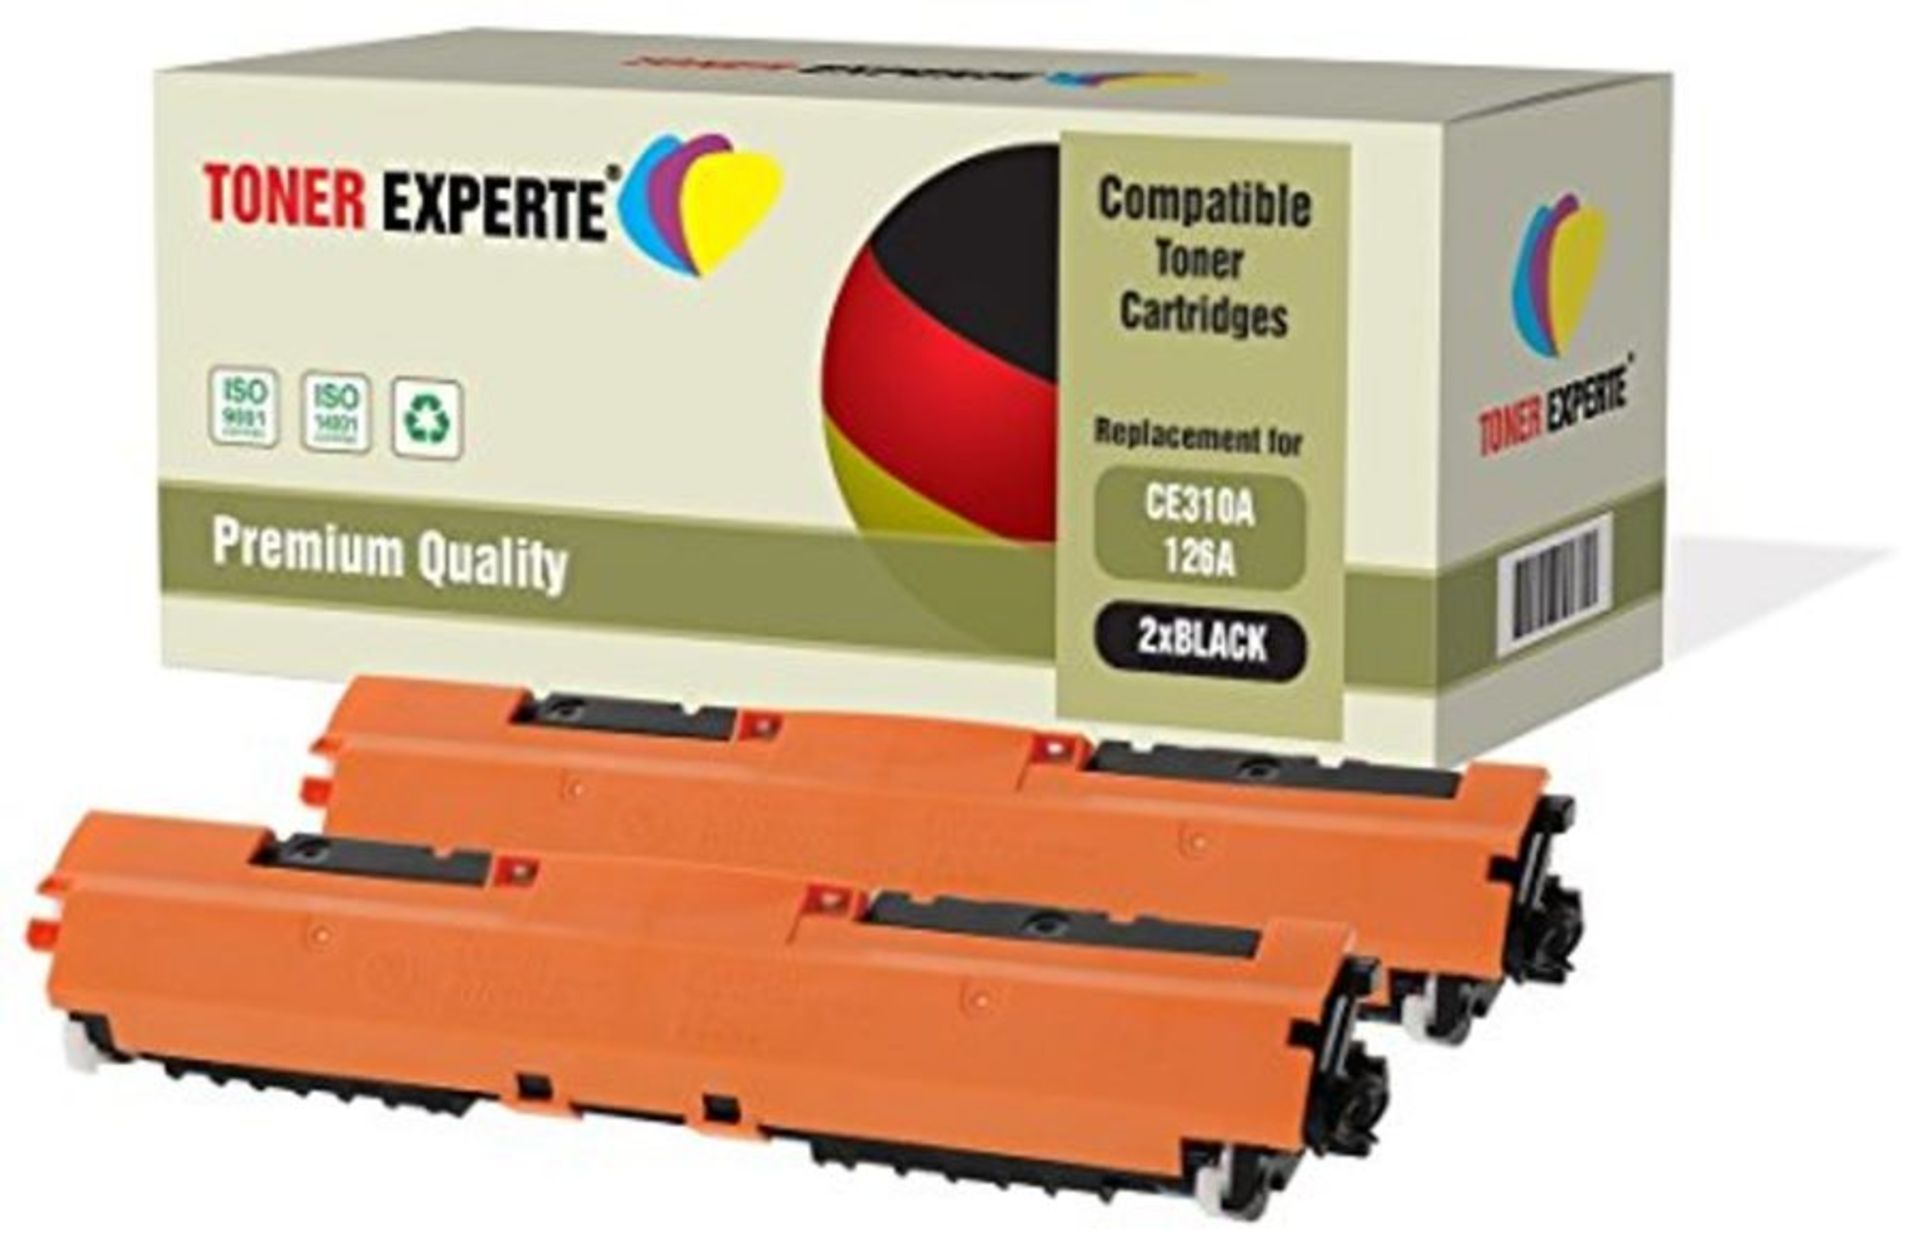 2-Pack TONER EXPERTEÂ® Compatible with HP 126A CE310A Black Premium Toner Cartridges